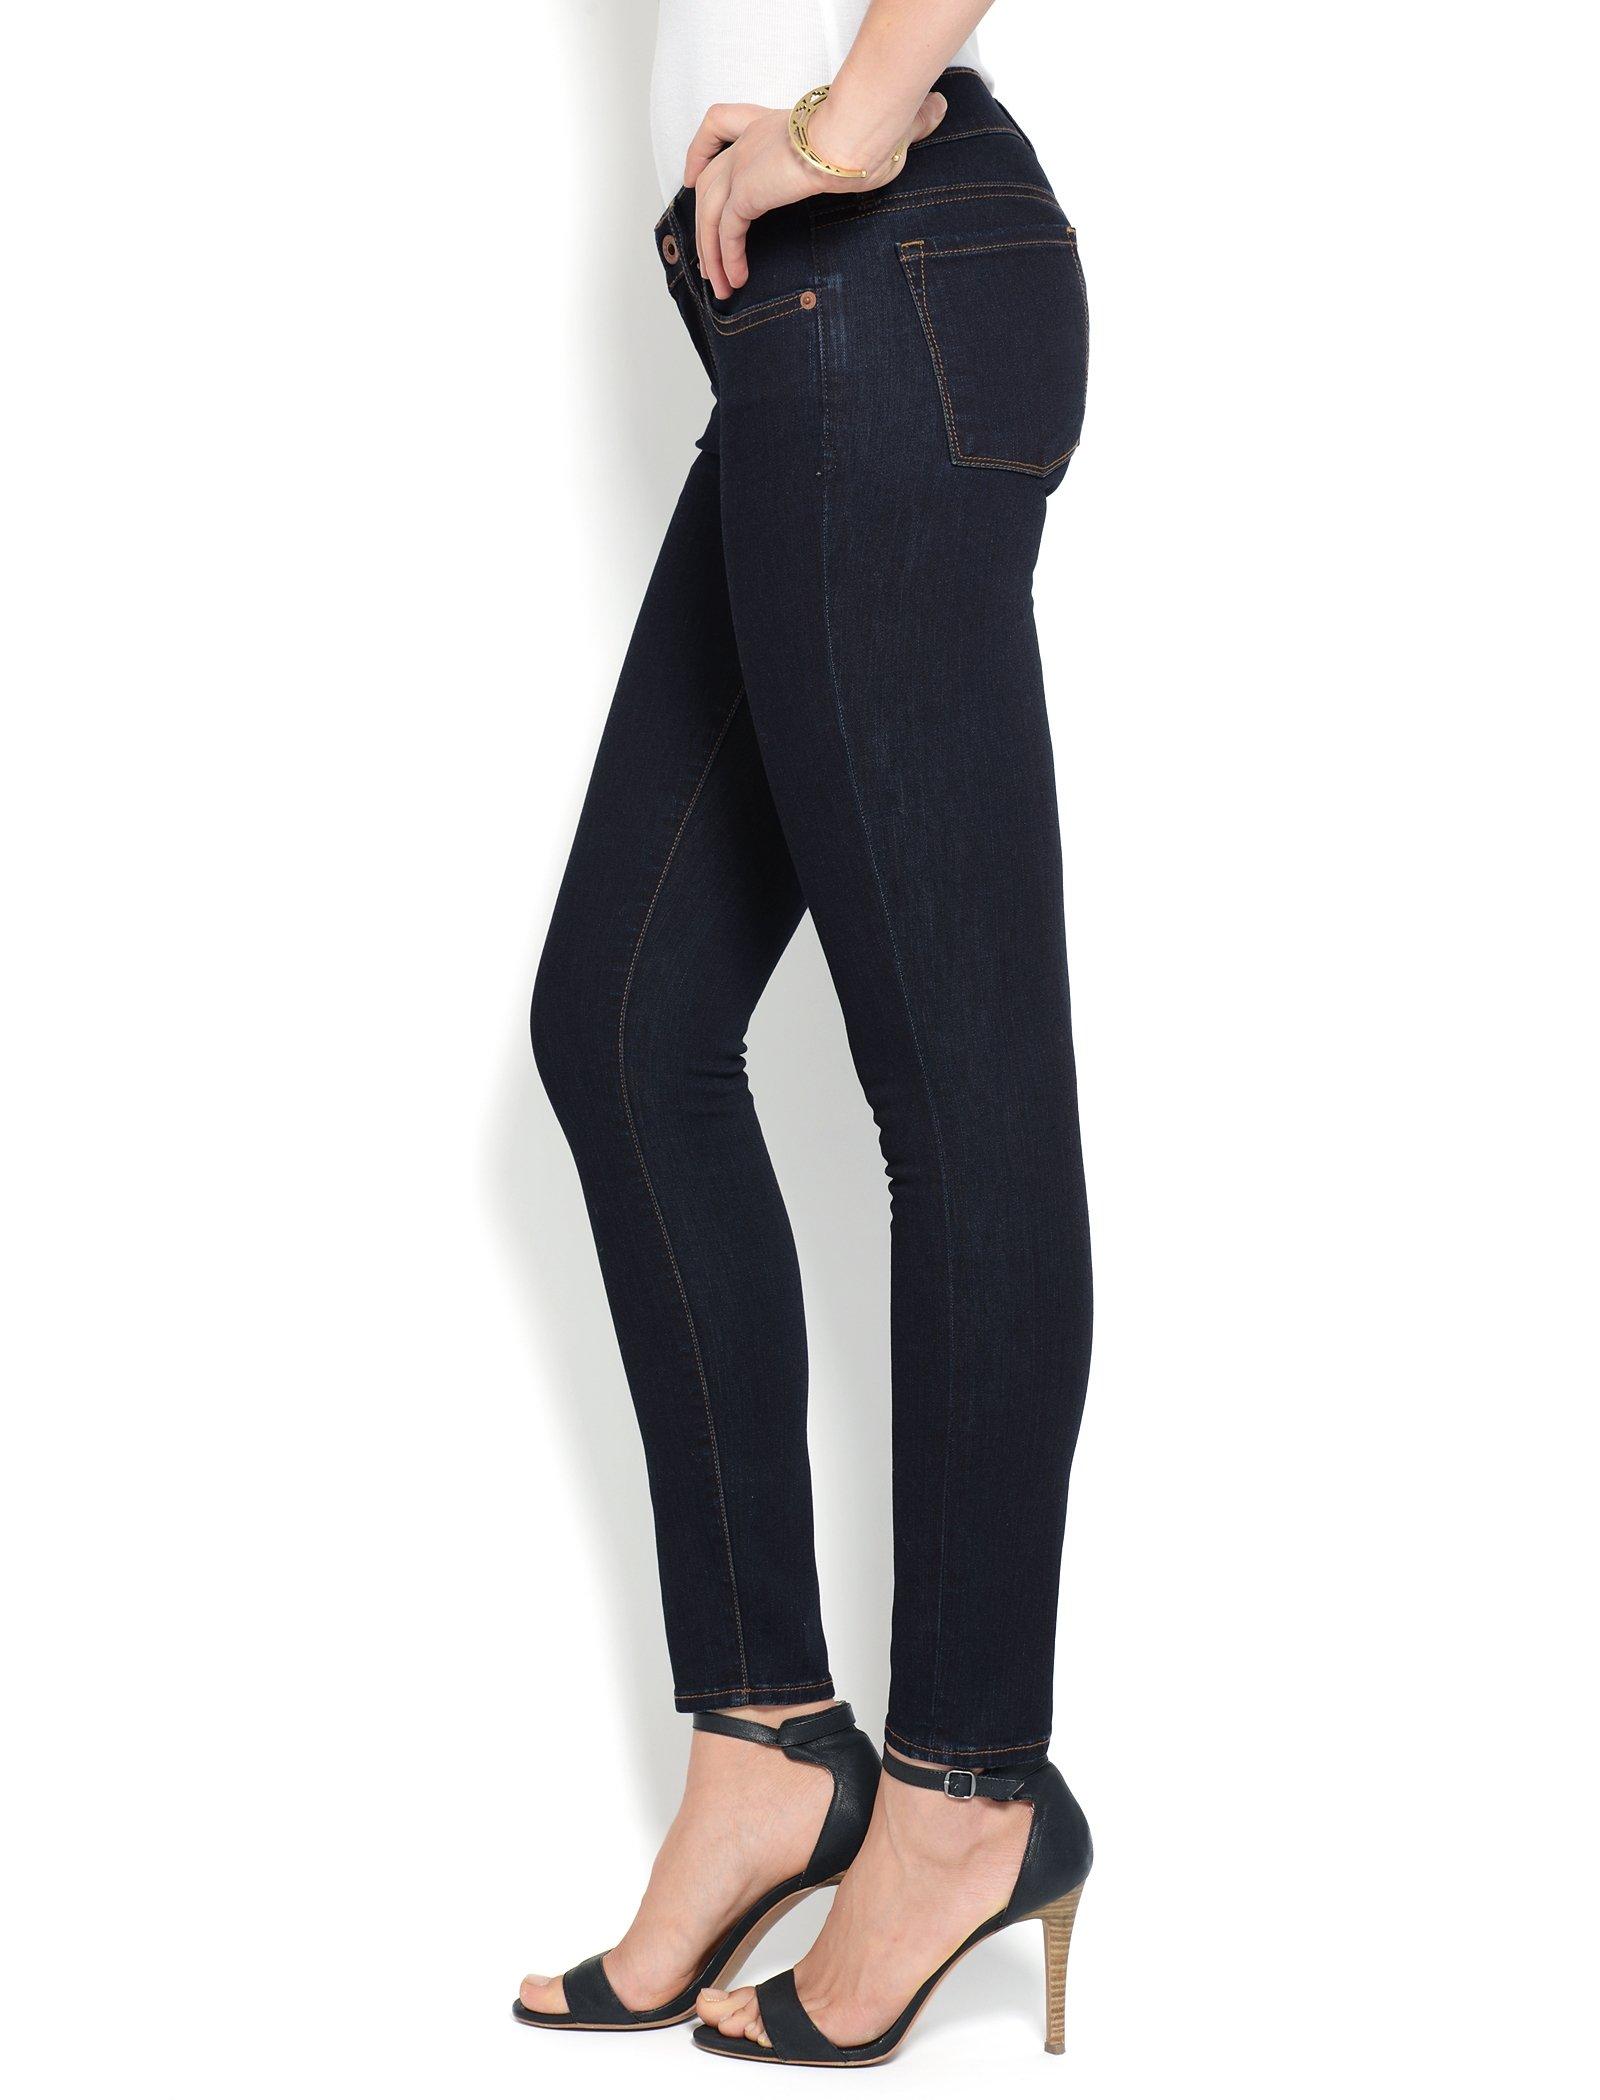 Lucky Brand Women's Charlie Skinny White Oak Cone Denim Jeans Size 8  Regular - $41 - From Brian